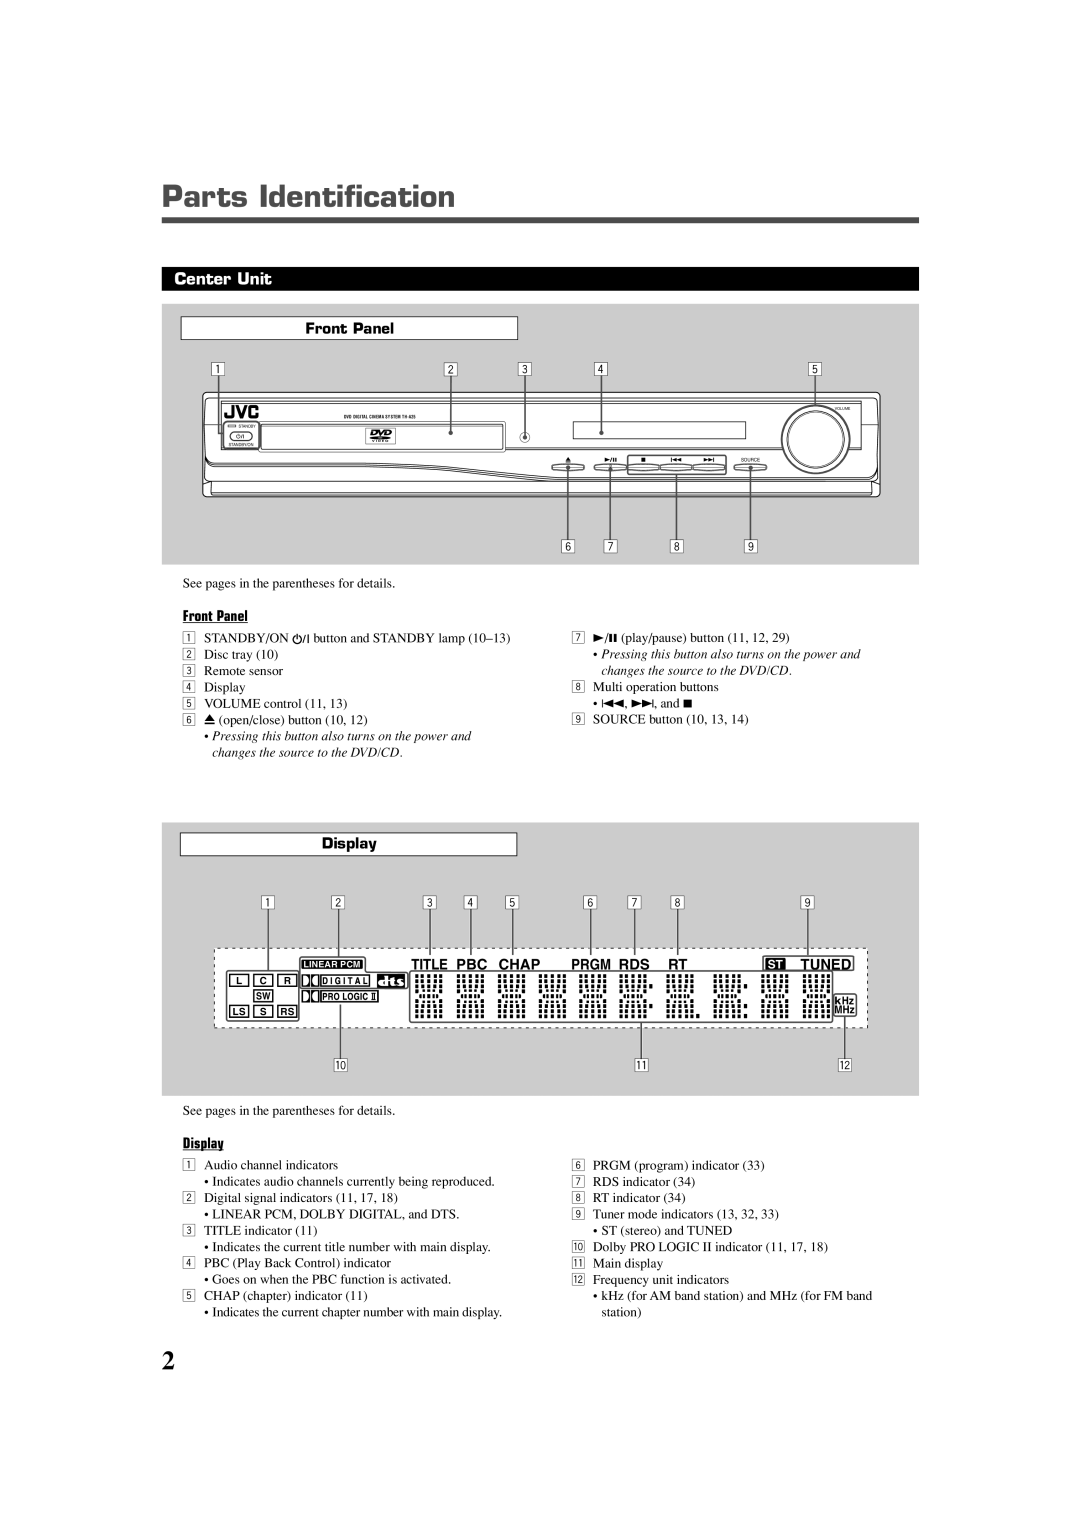 JVC TH-A25 manual Parts Identification, Center Unit, Front Panel, Display, Title Pbc, Chap, Prgm Rds, Tuned 